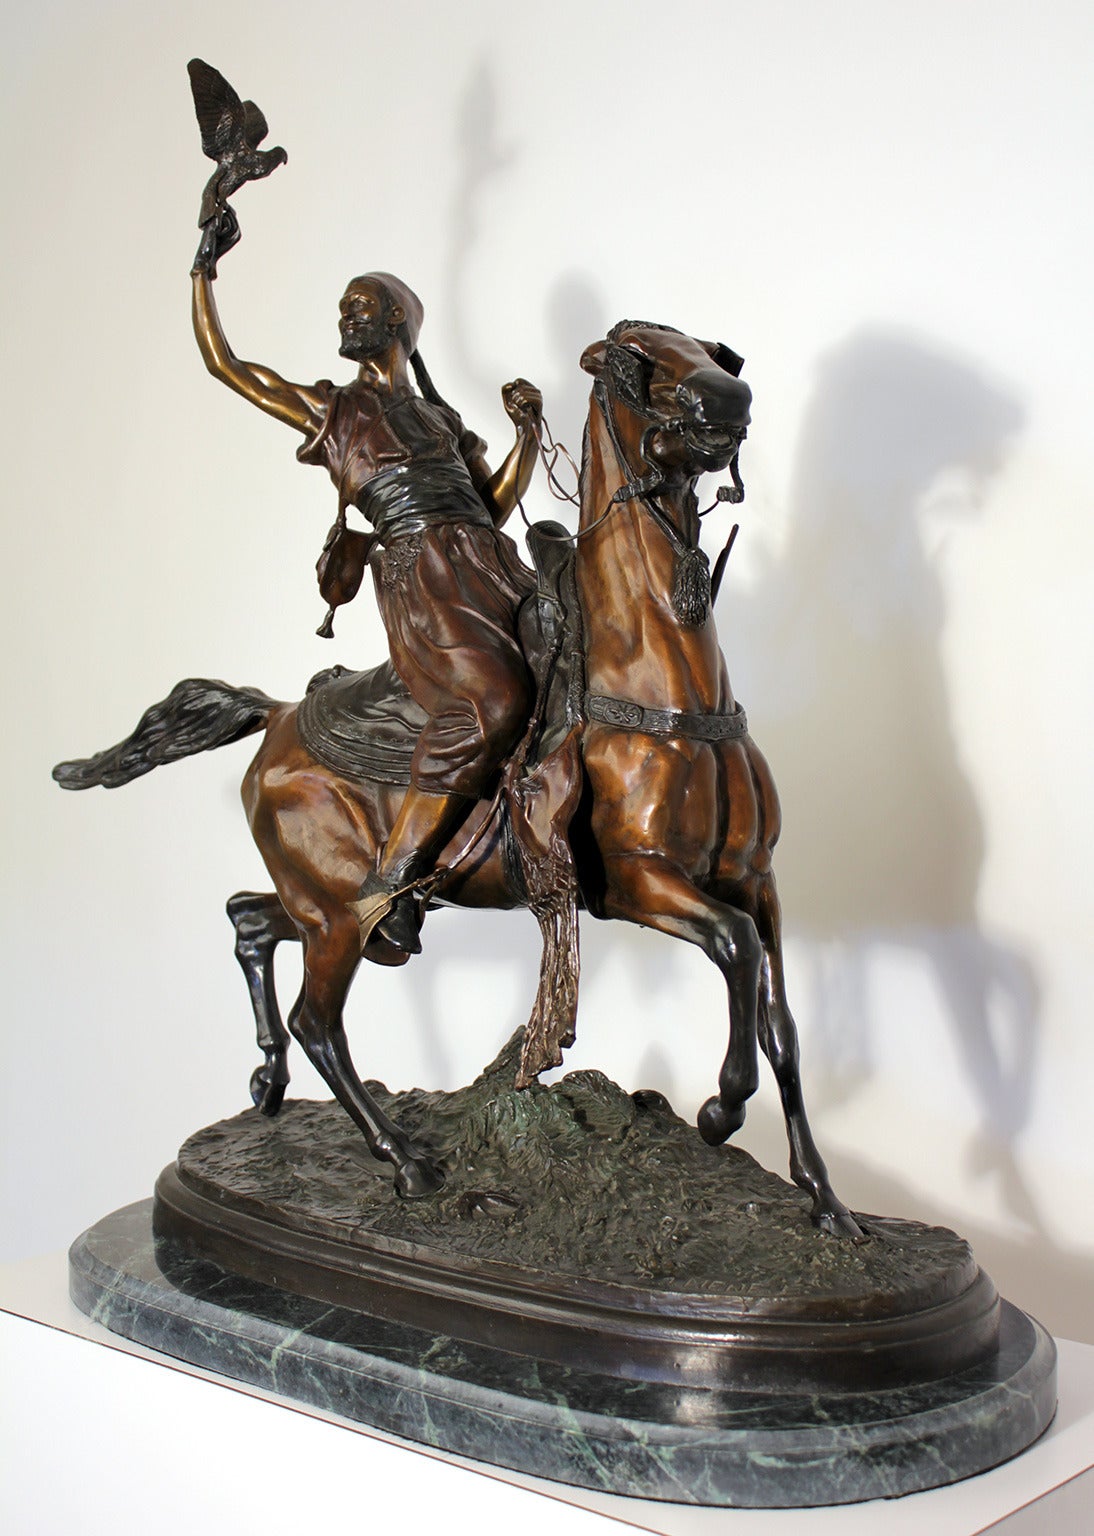 Impressive bronze sculpture by Pierre Jules Mene. Titled 